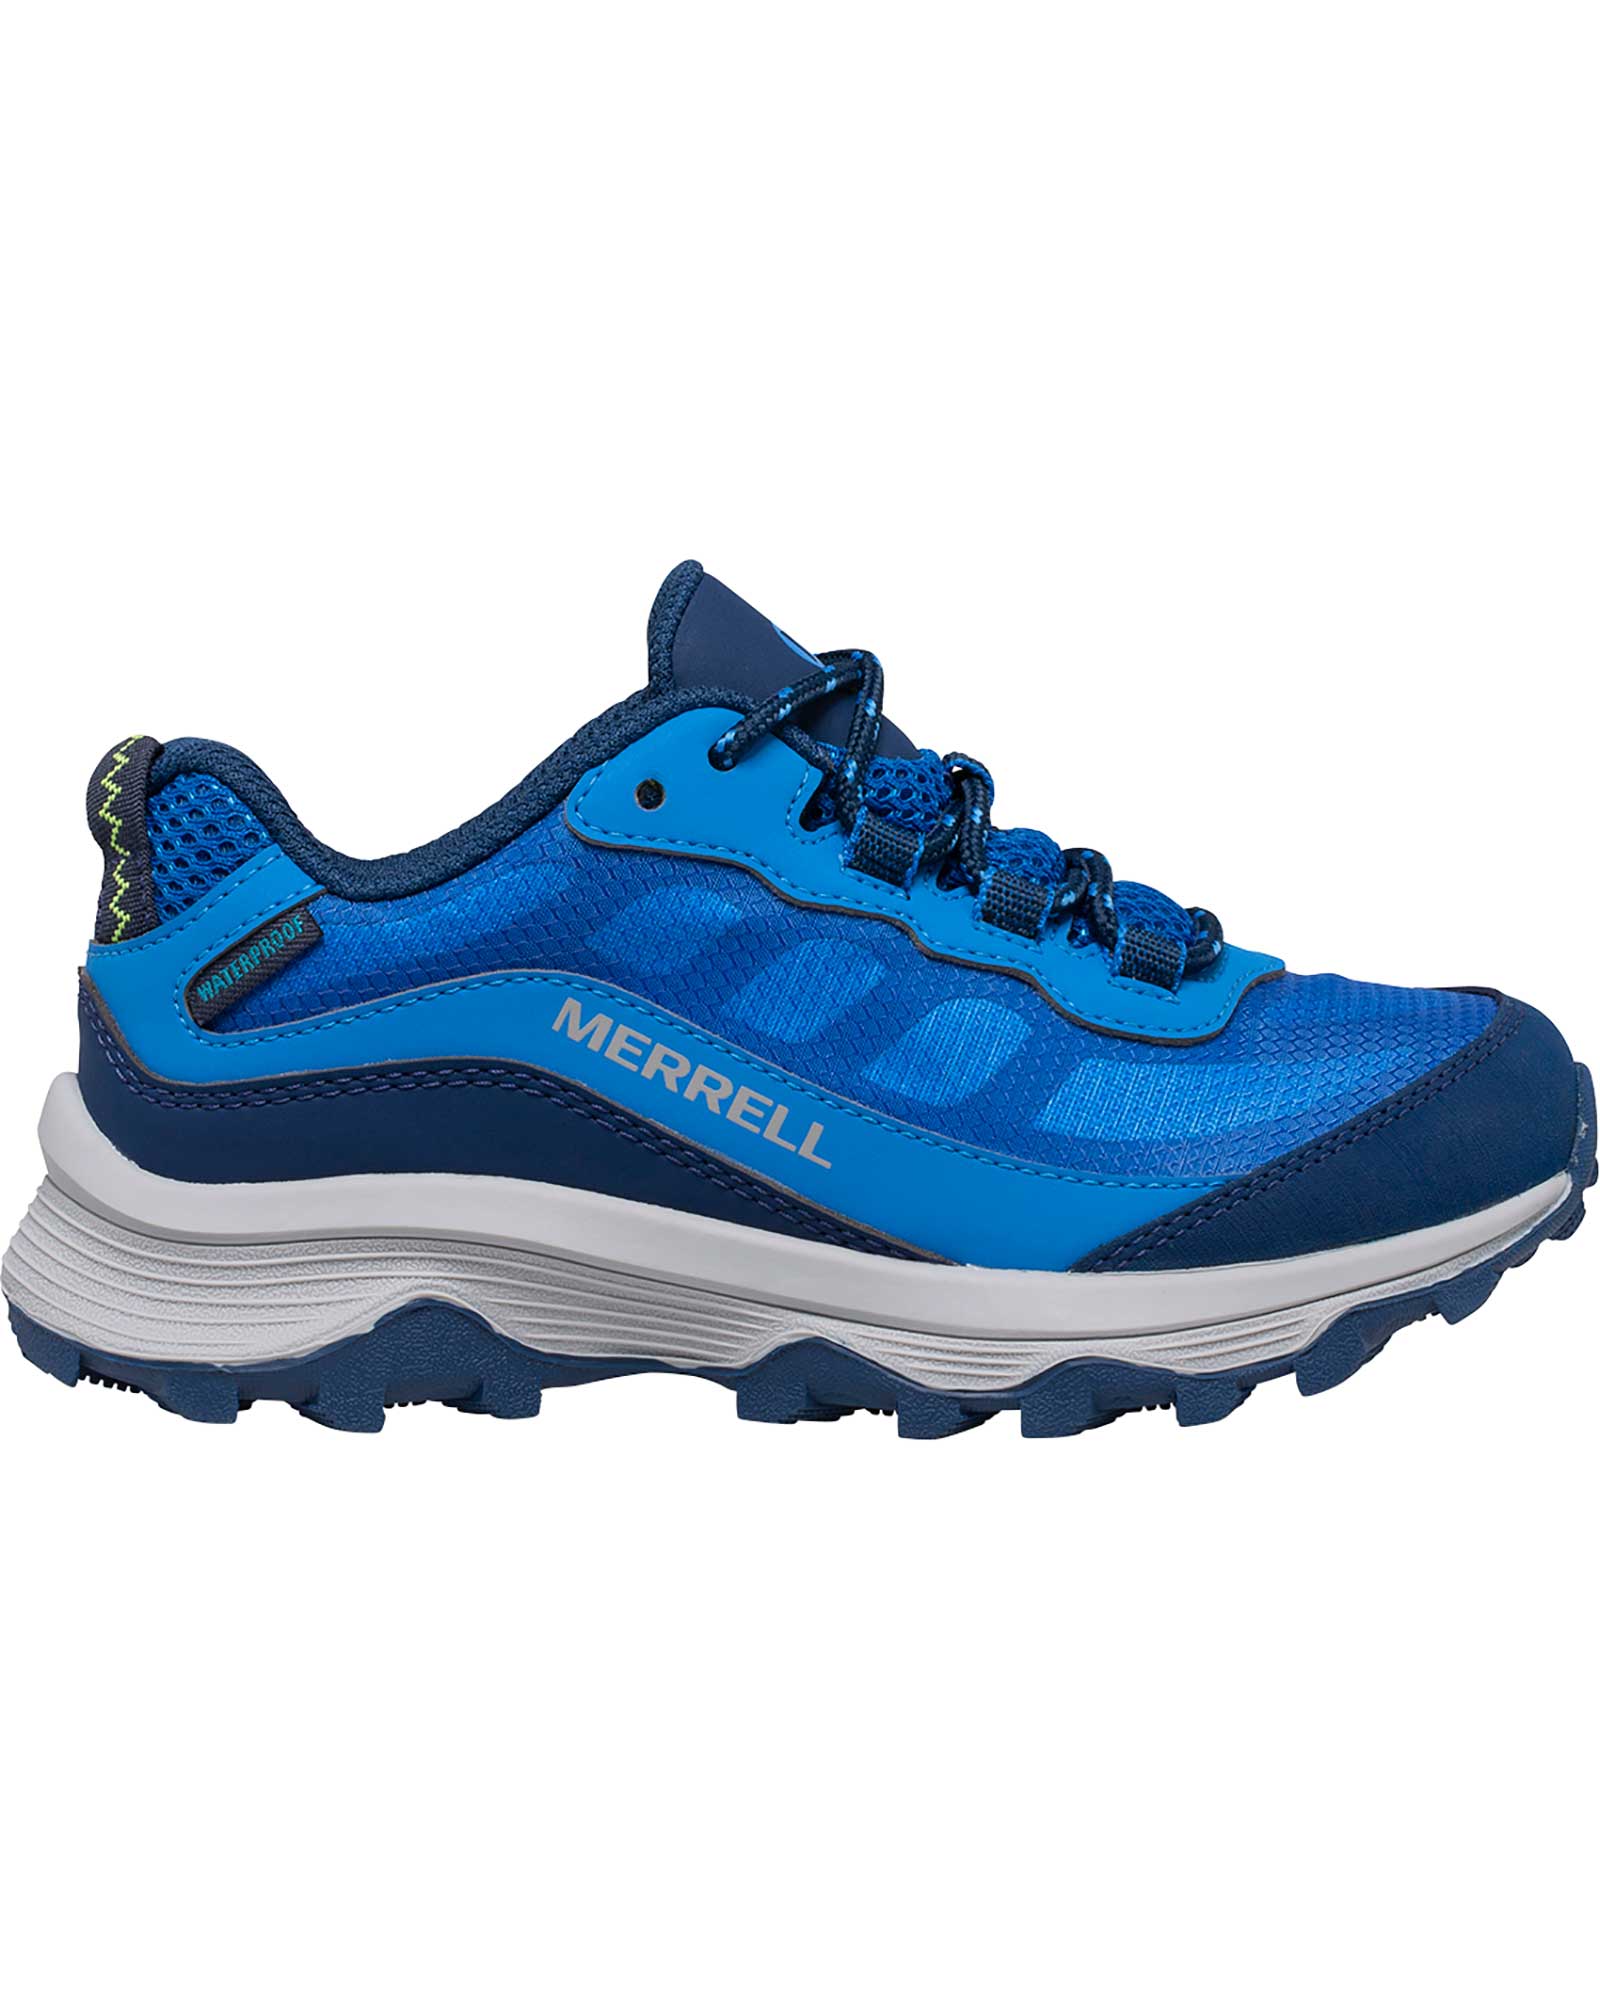 Merrell Moab Speed Laces Kids’ Waterproof Shoes - Blue UK 2